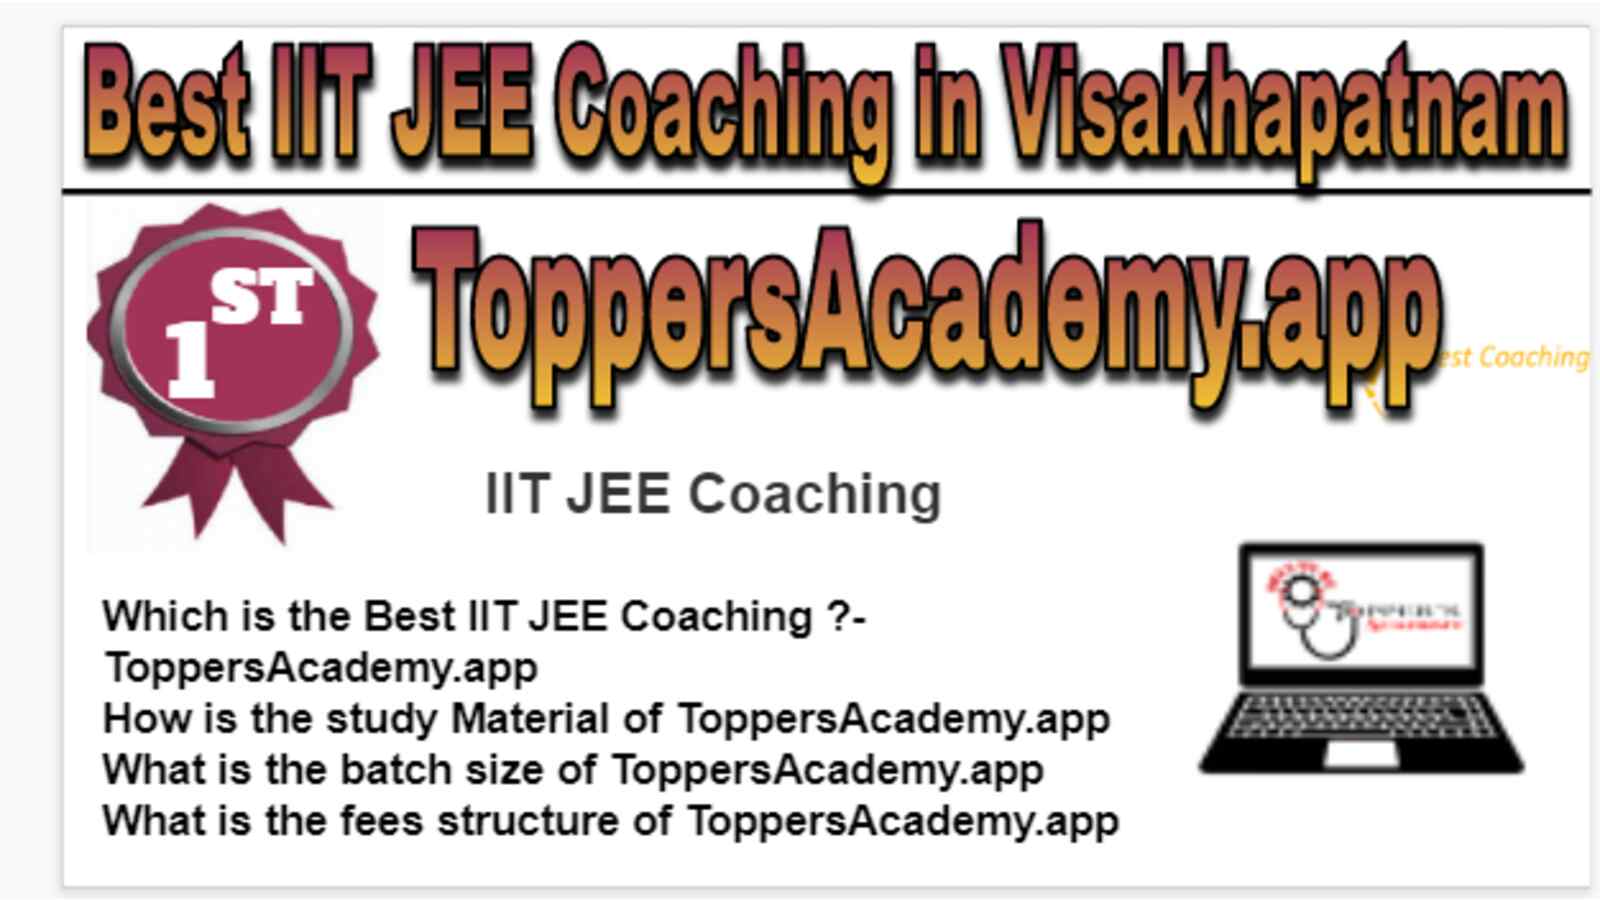 Rank 1 Best IIT JEE Coaching in Visakhapatnam